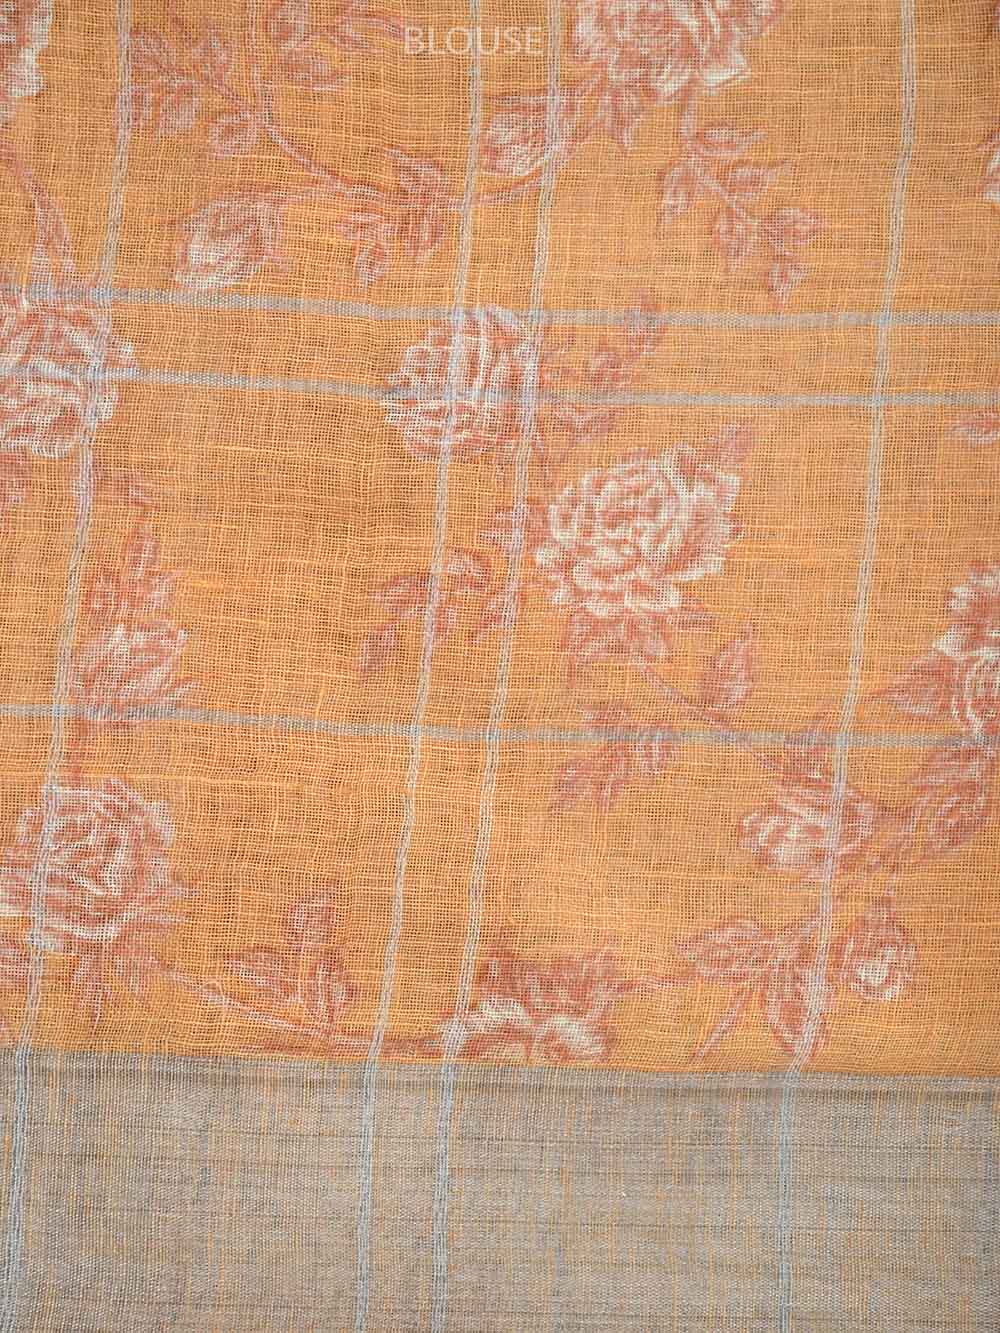 Coral Peach Linen Check Handloom Banarasi Saree - Sacred Weaves